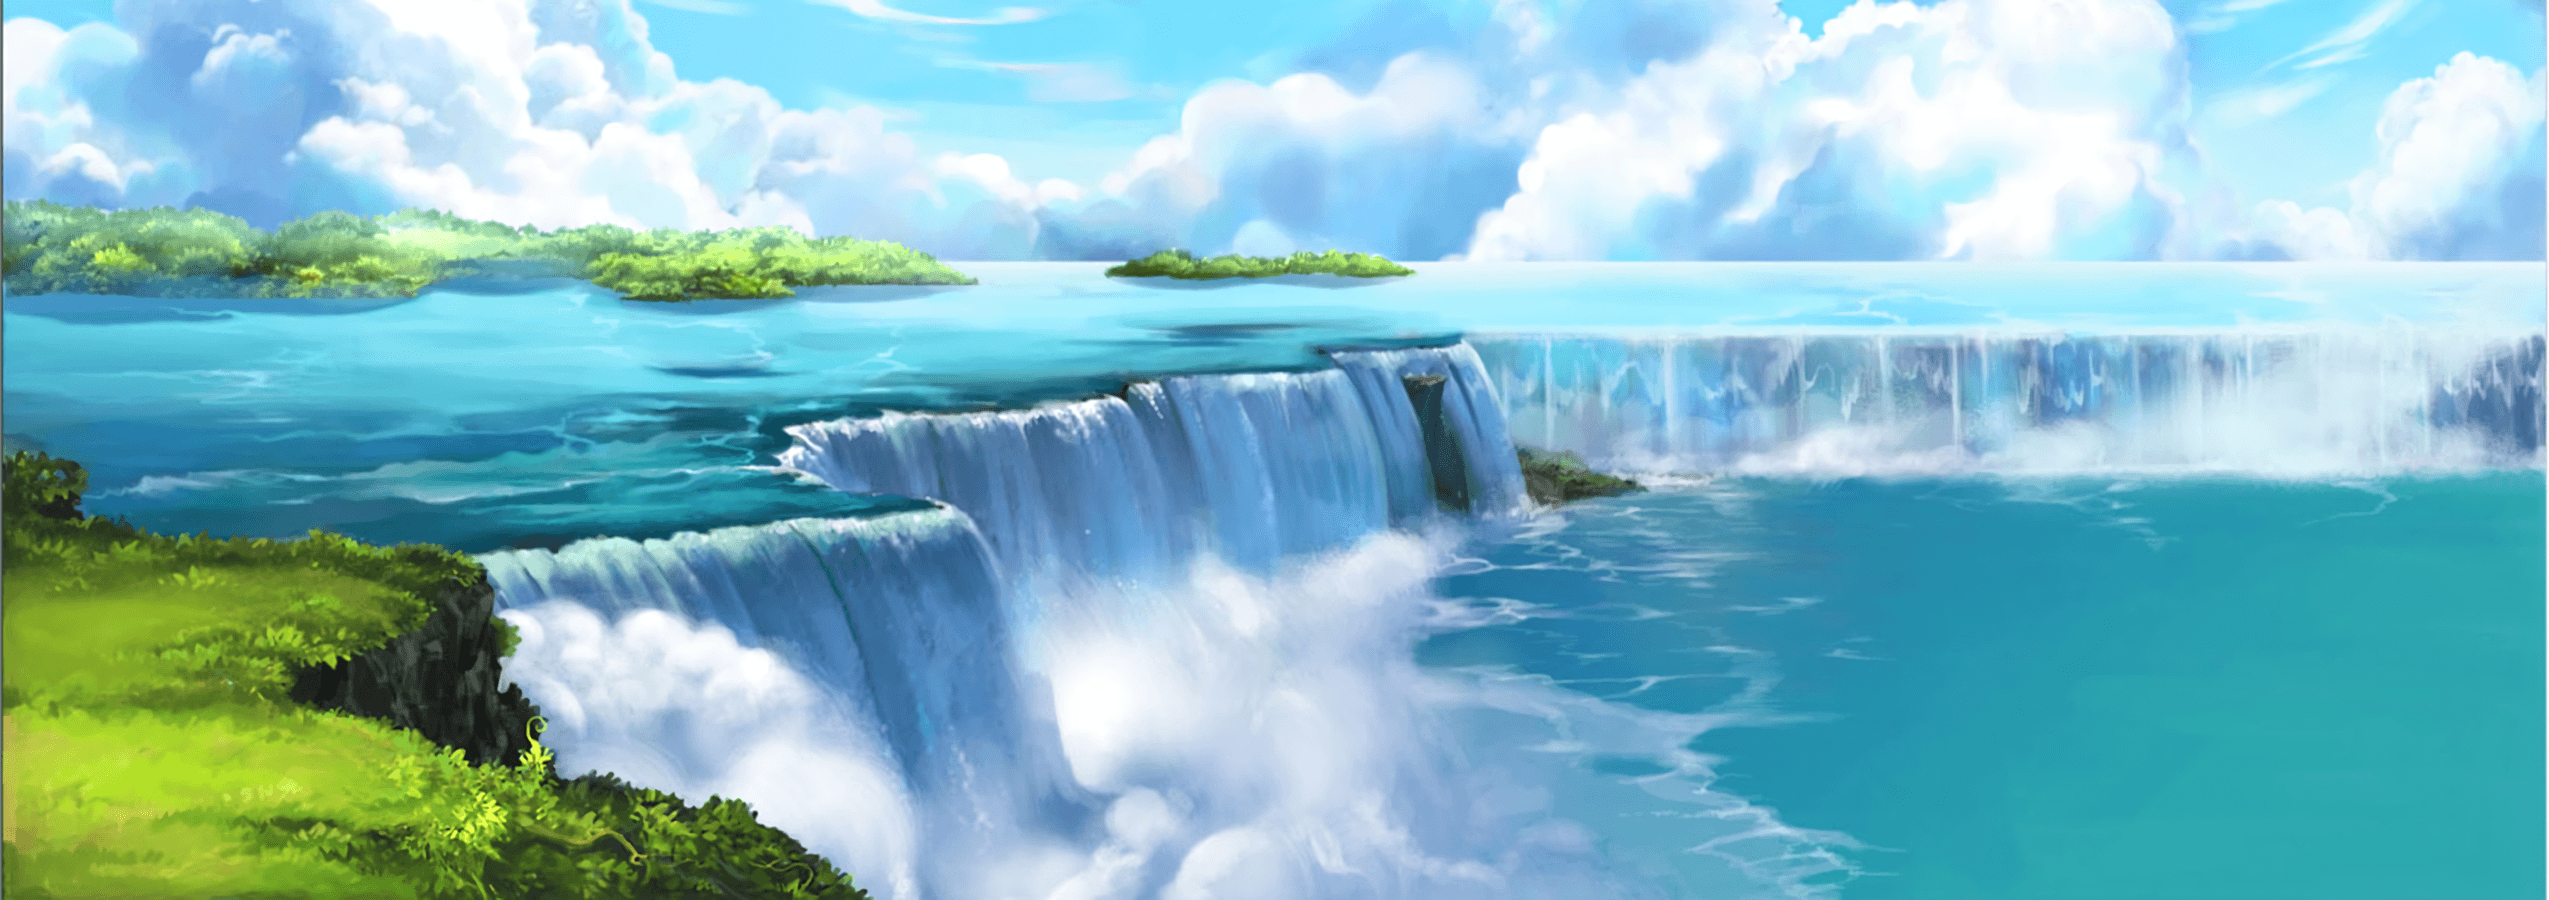 Водопад и океан рисунок